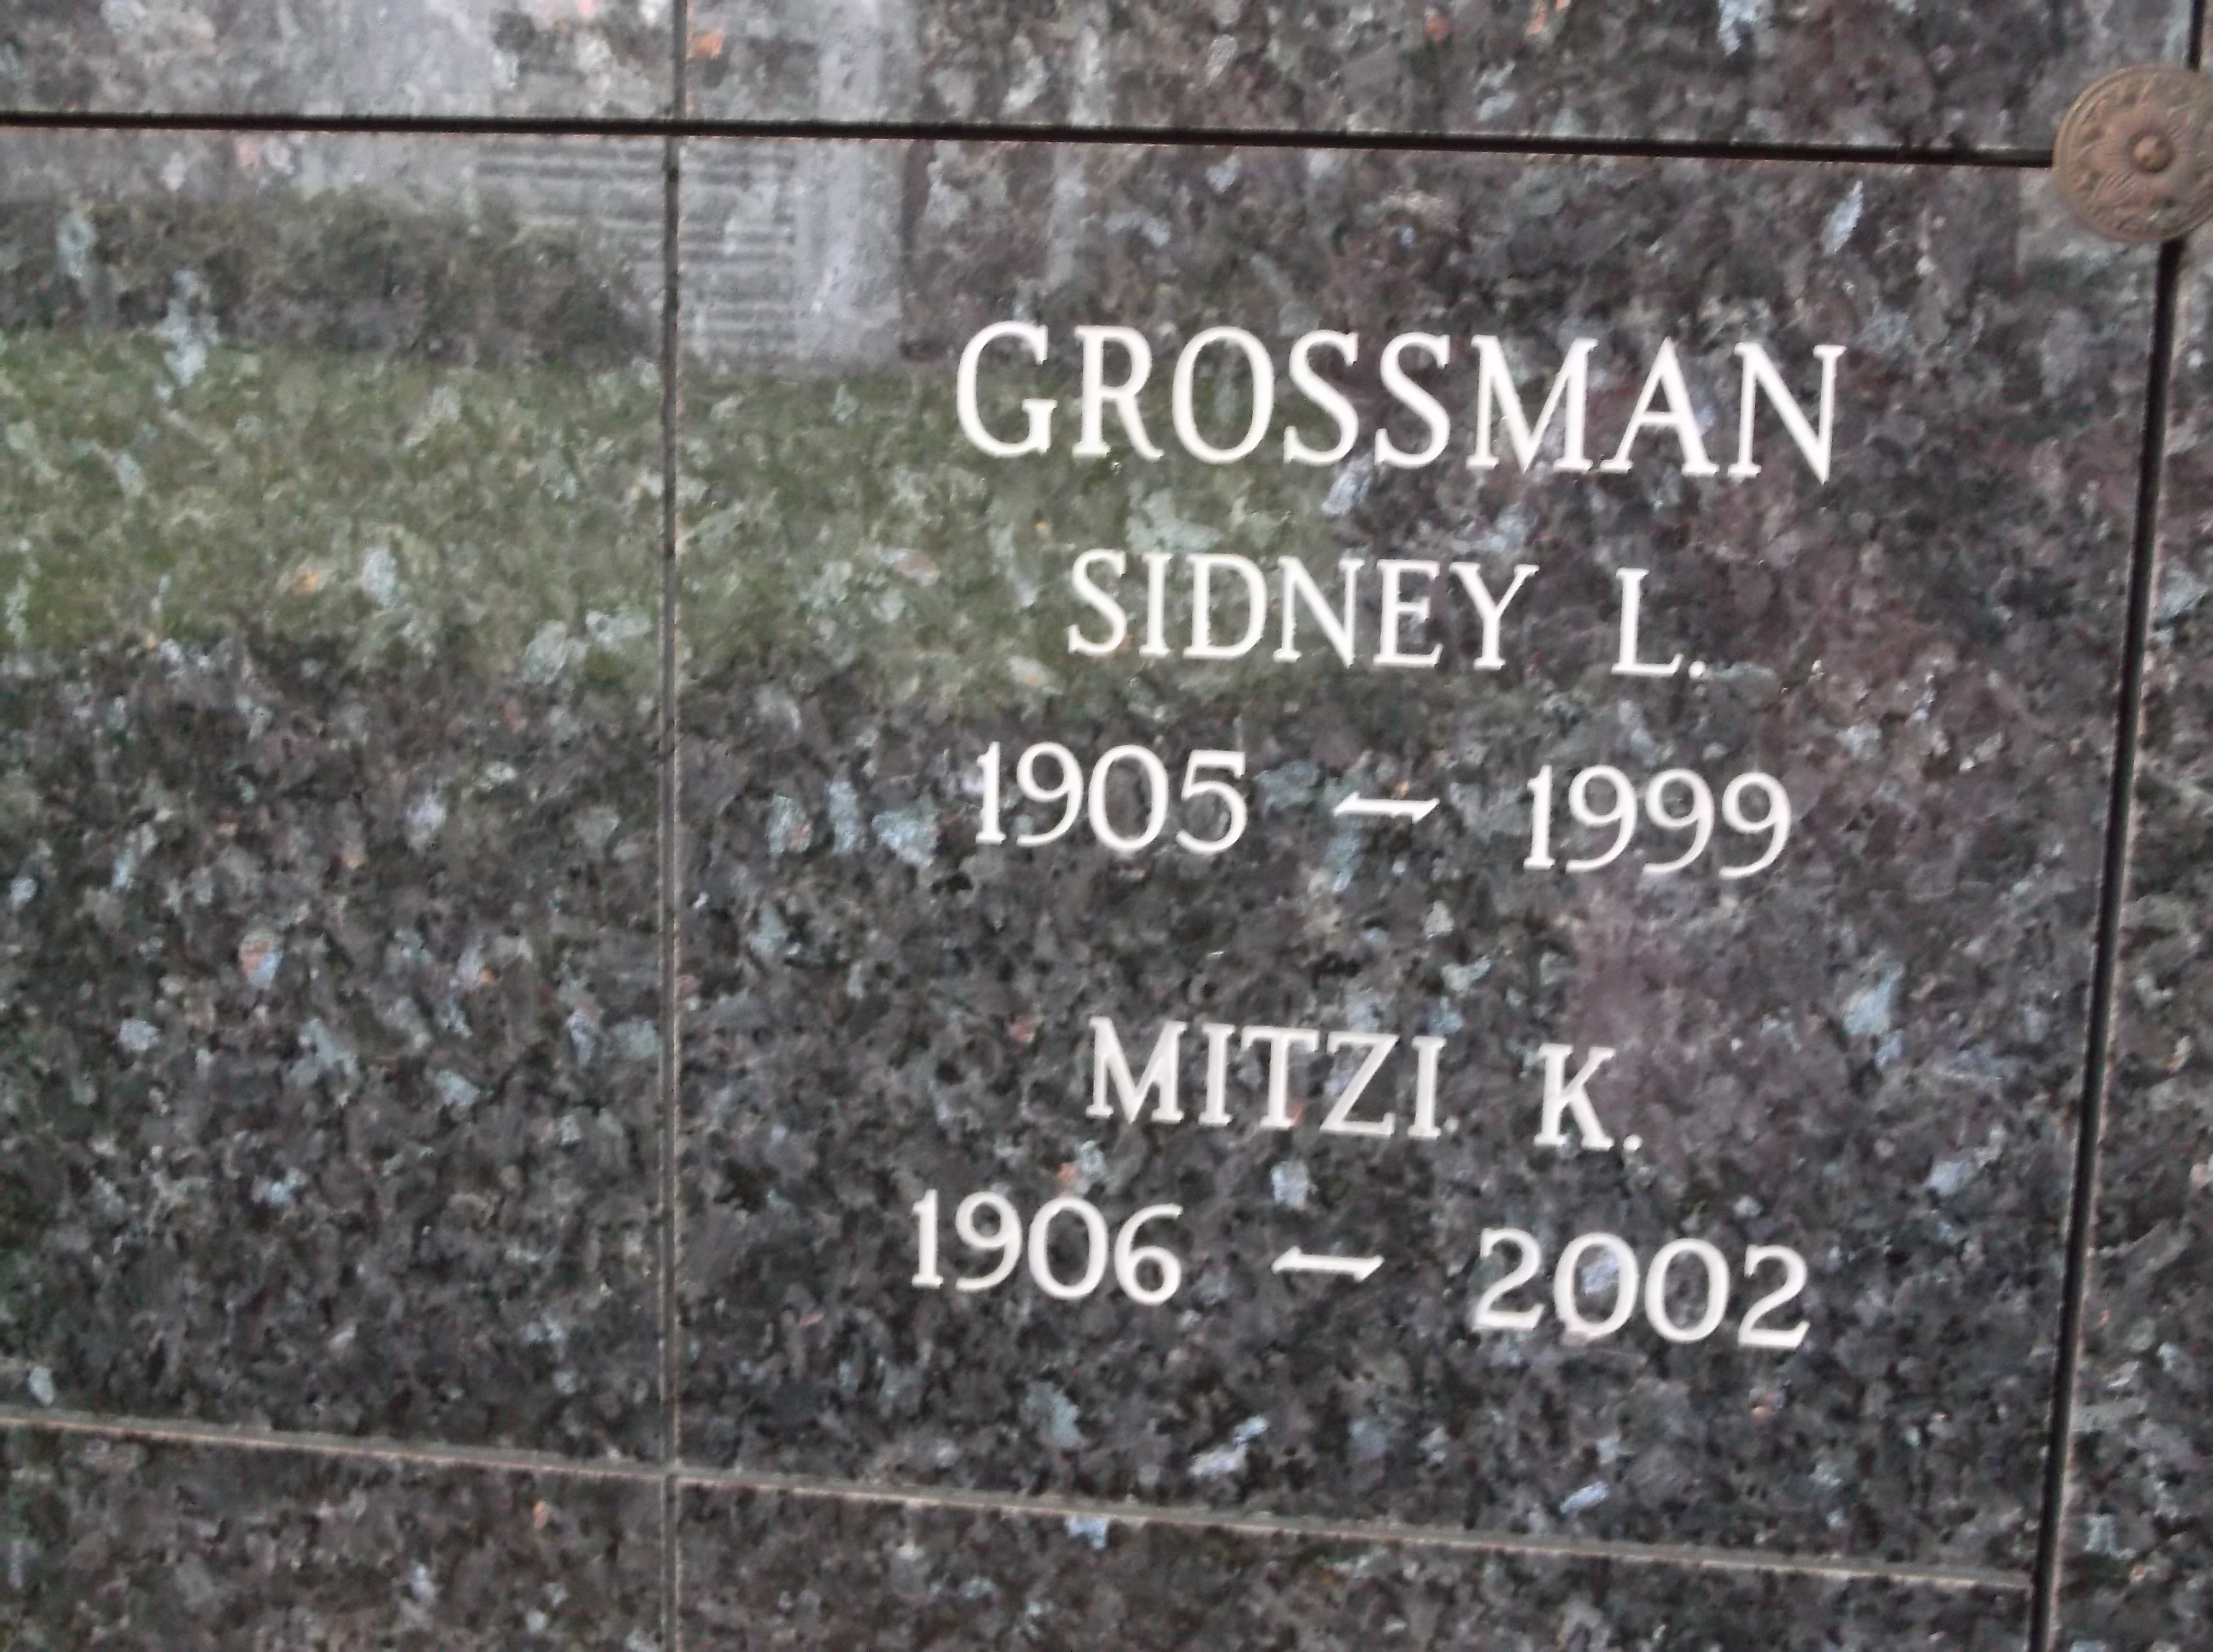 Mitzi K Grossman